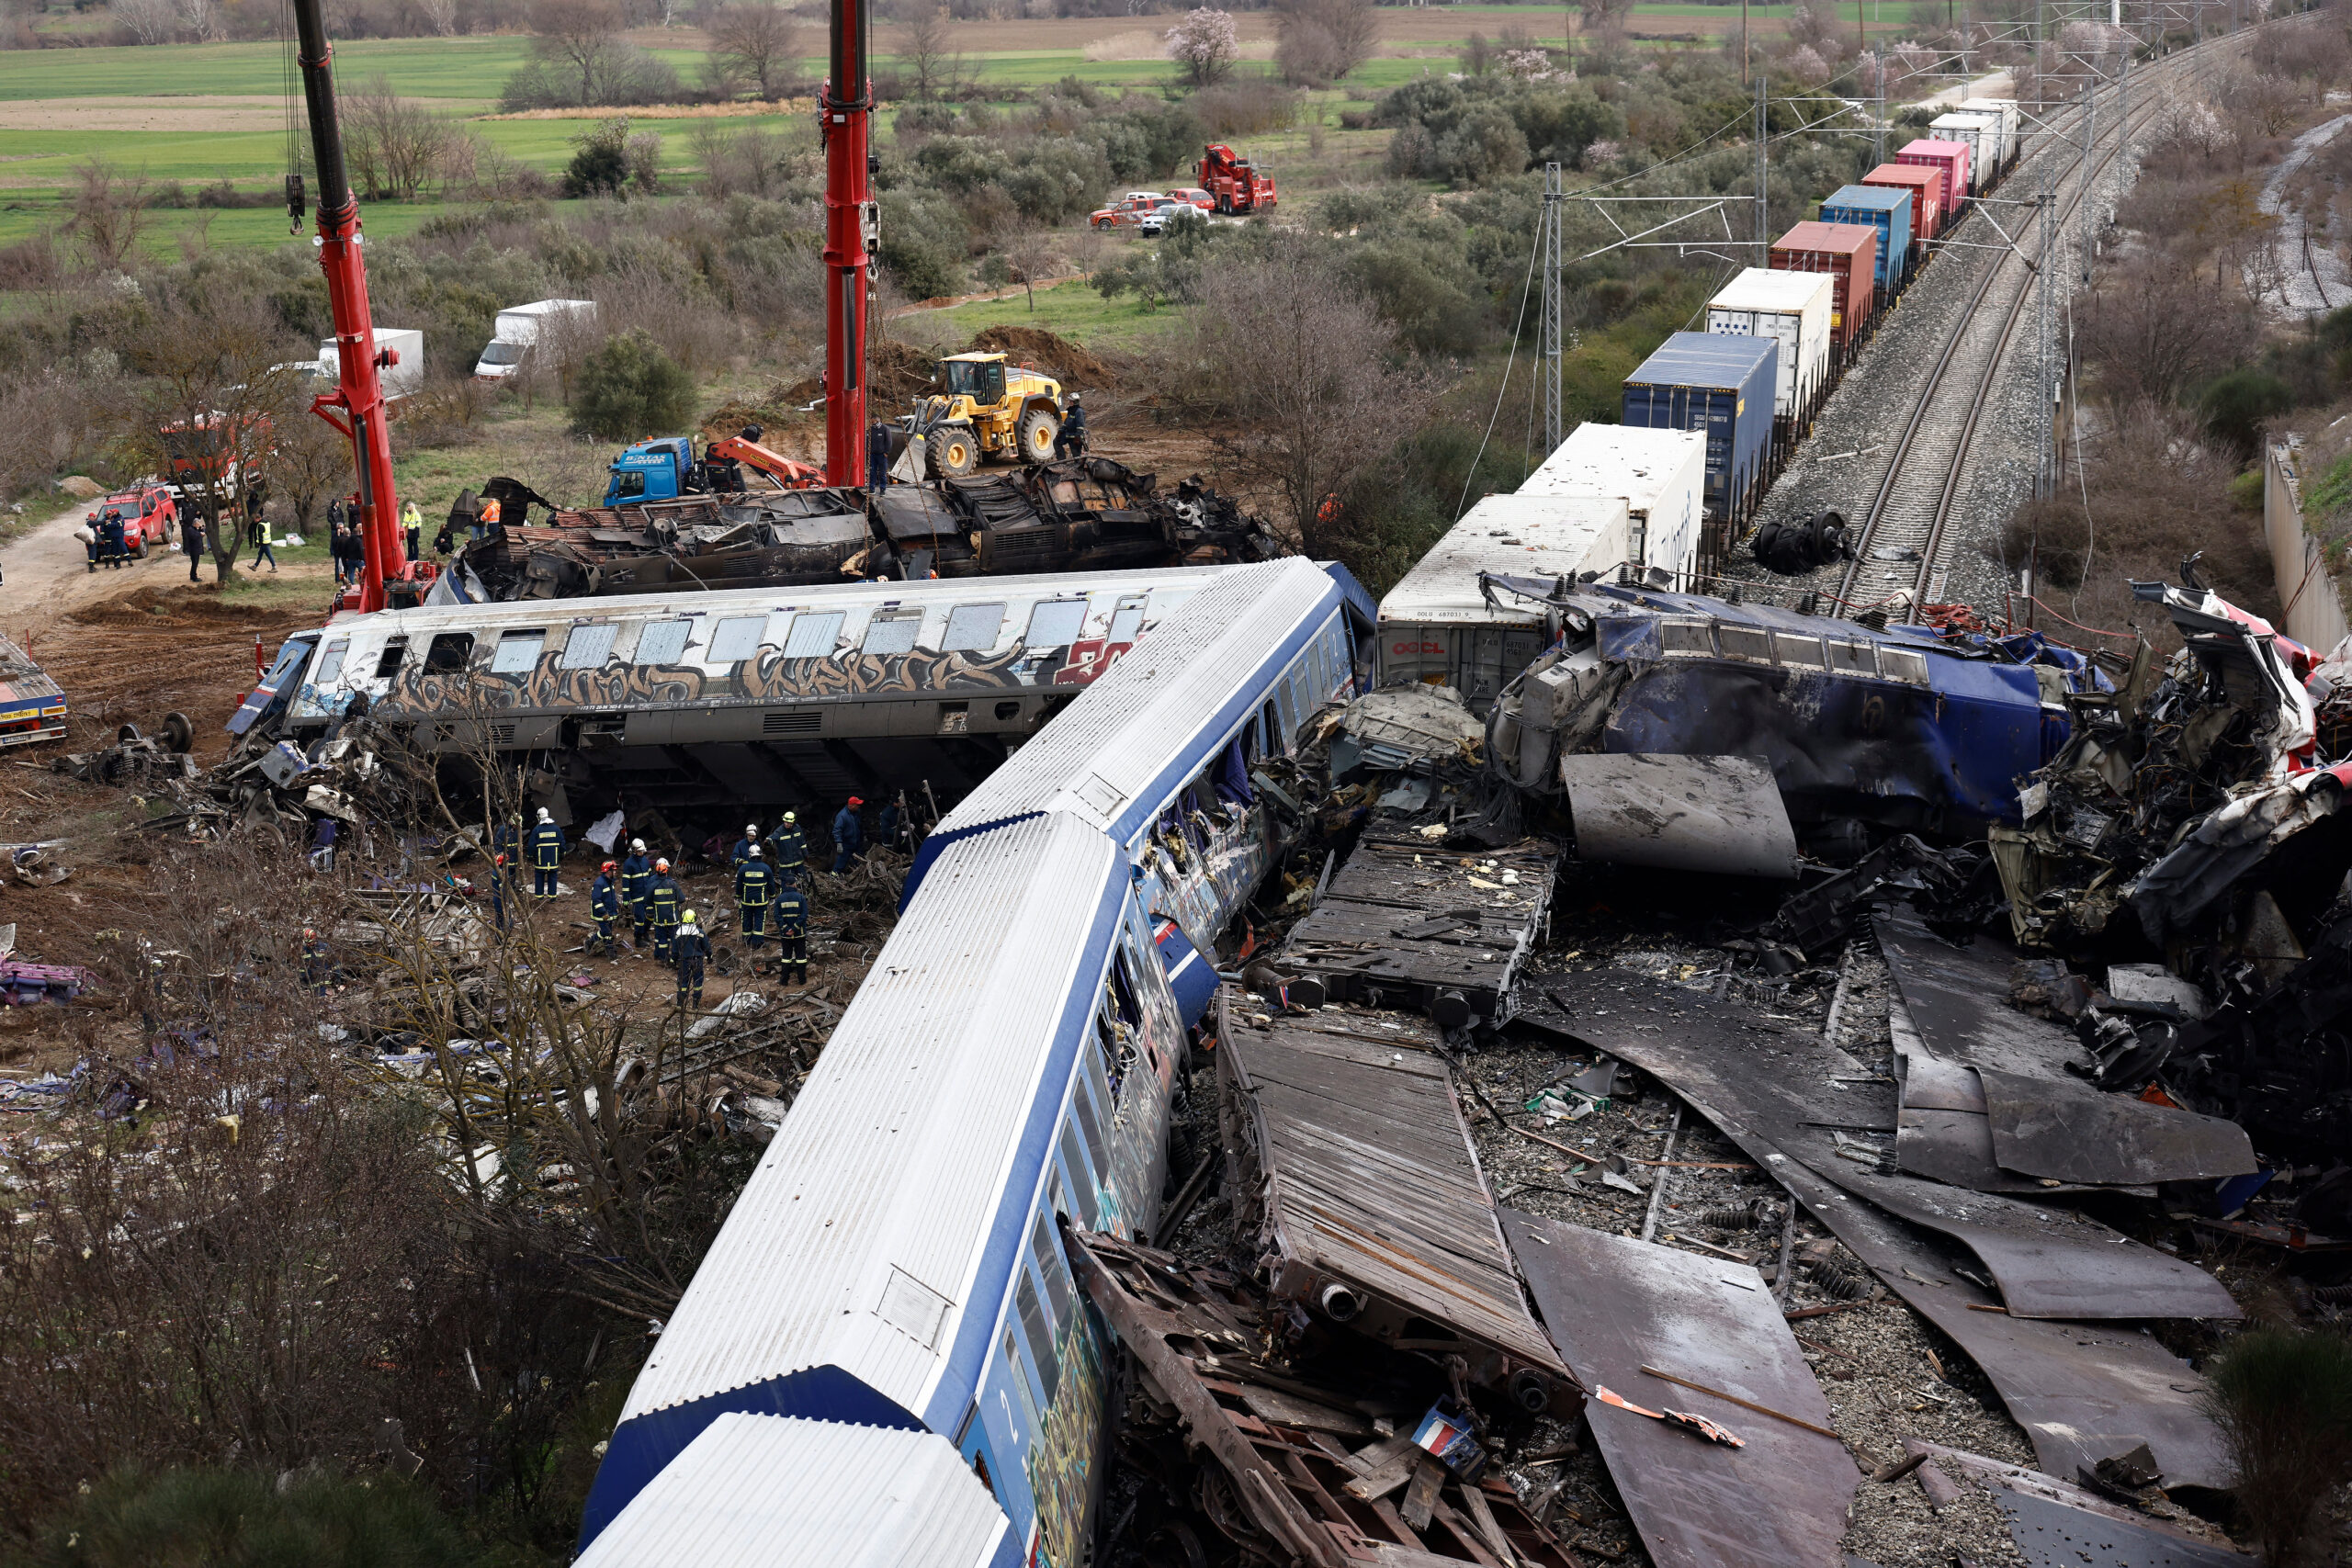 Live – Σύγκρουση τρένων στα Τέμπη: Εθνική τραγωδία με τουλάχιστον 36 νεκρούς – Τριήμερο εθνικό πένθος